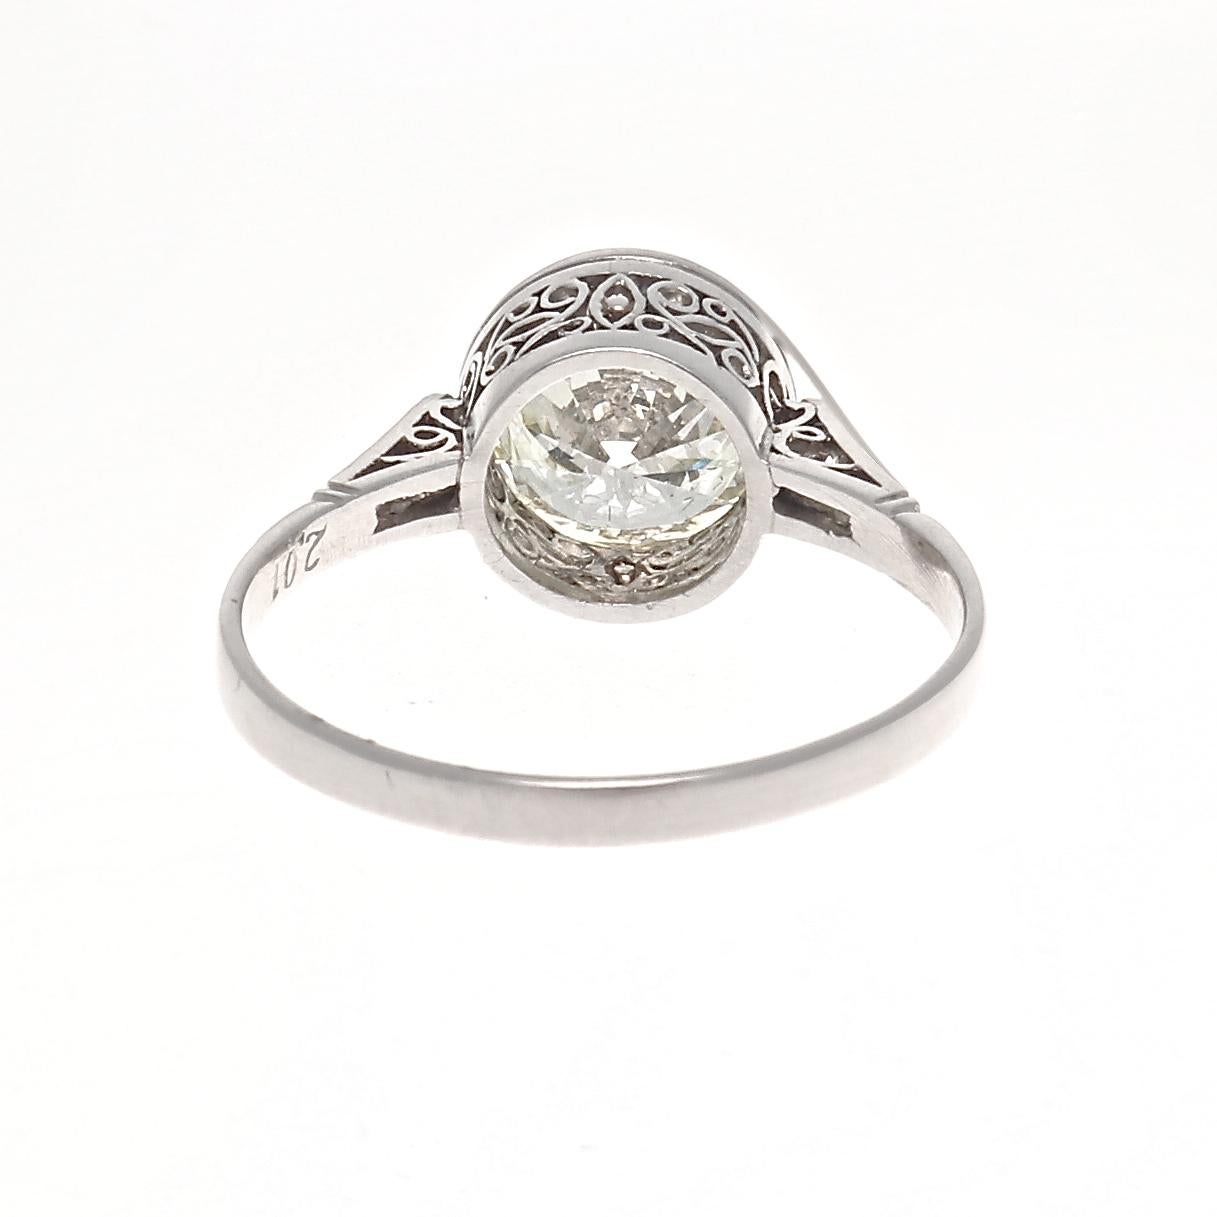 Women's Art Deco Revival 2.01 Carat Old European Cut Diamond Platinum Engagement Ring